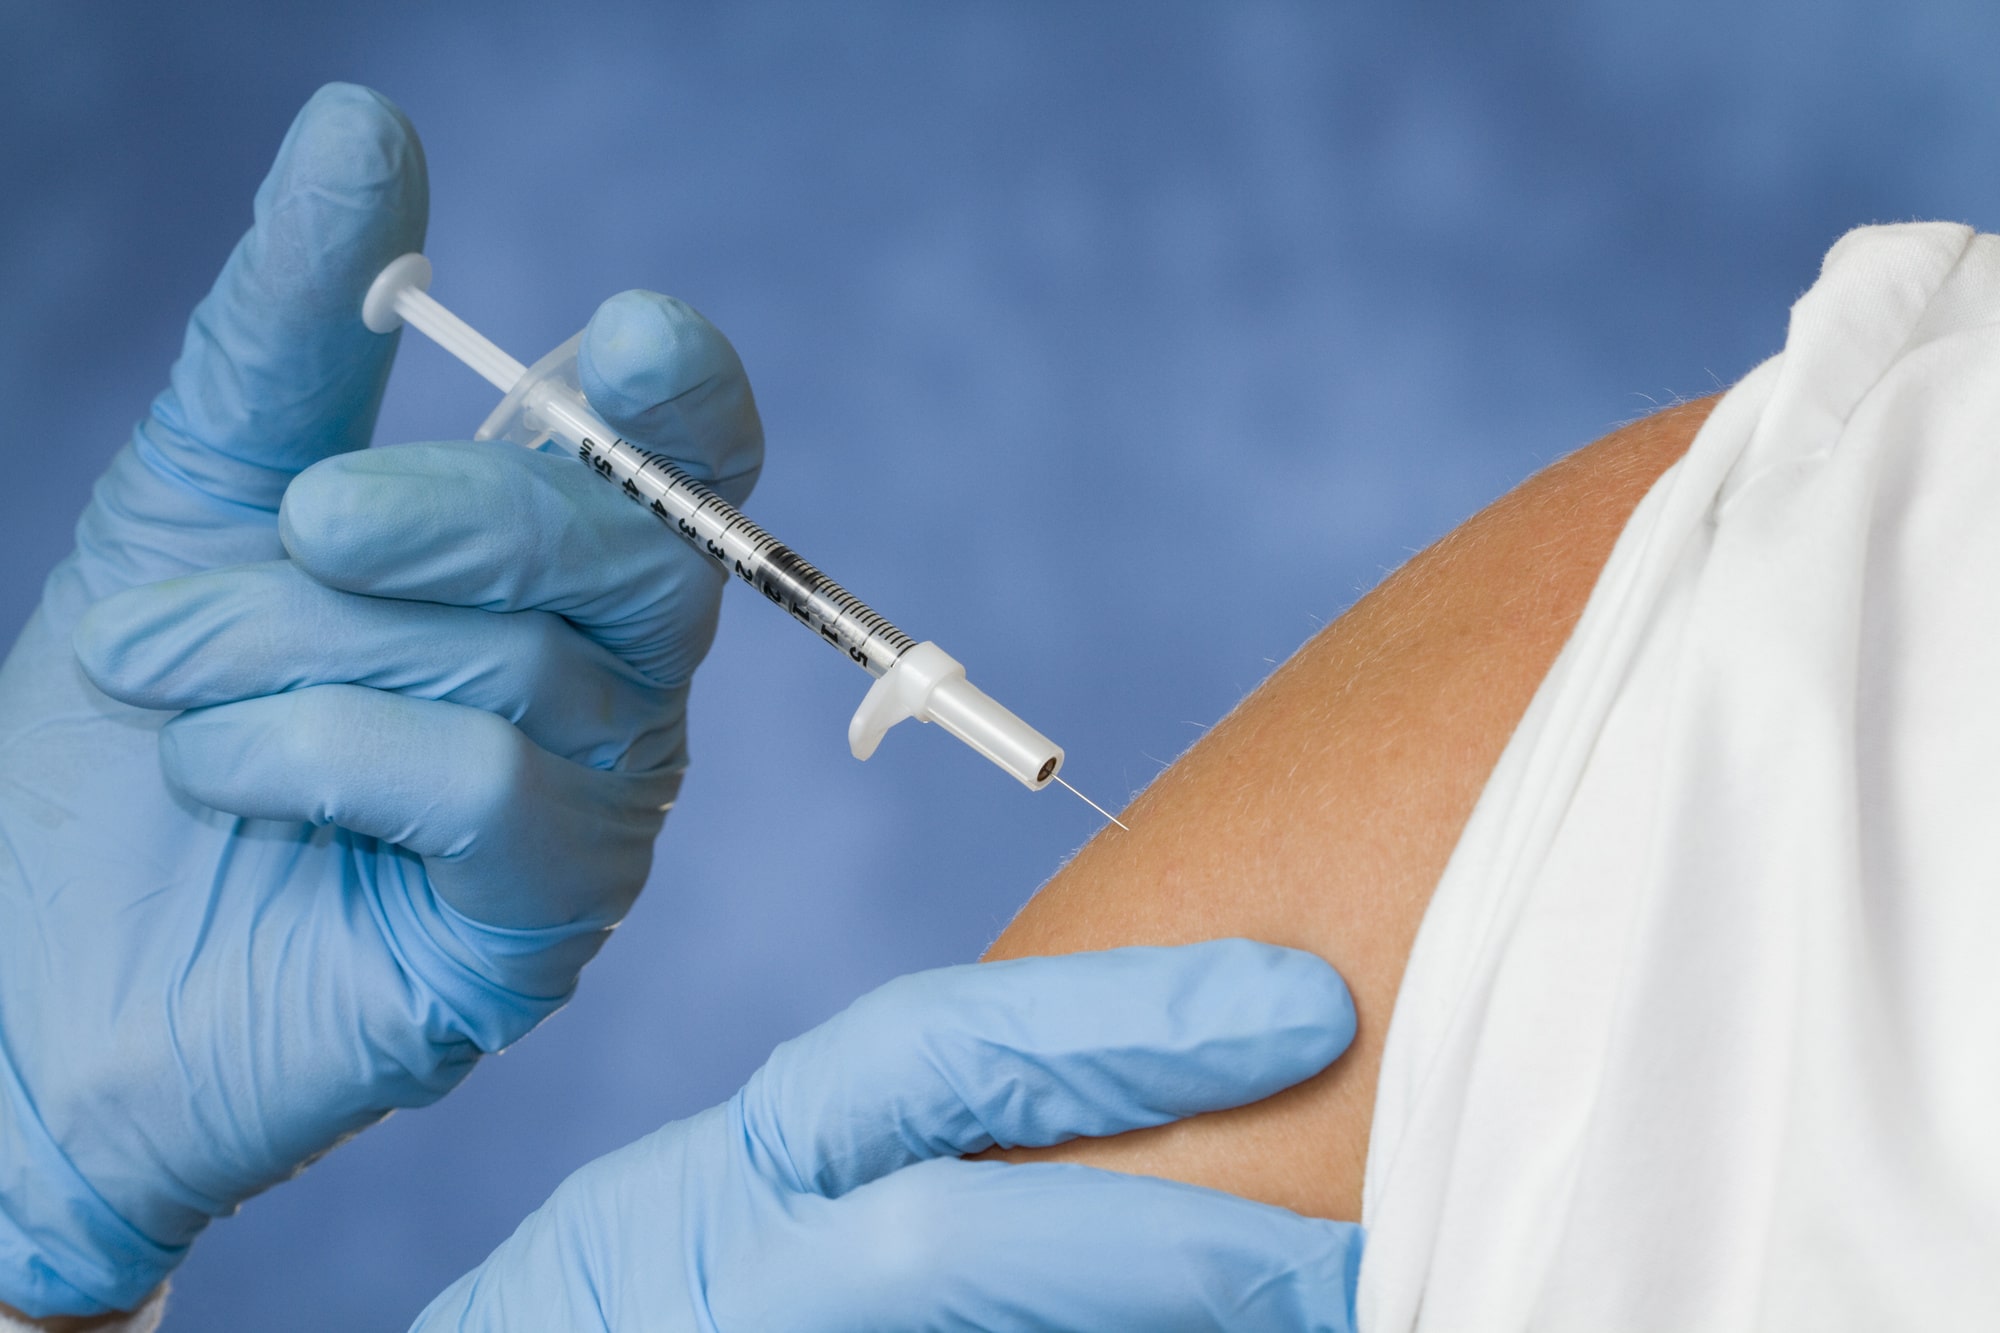 arm receiving flu shot